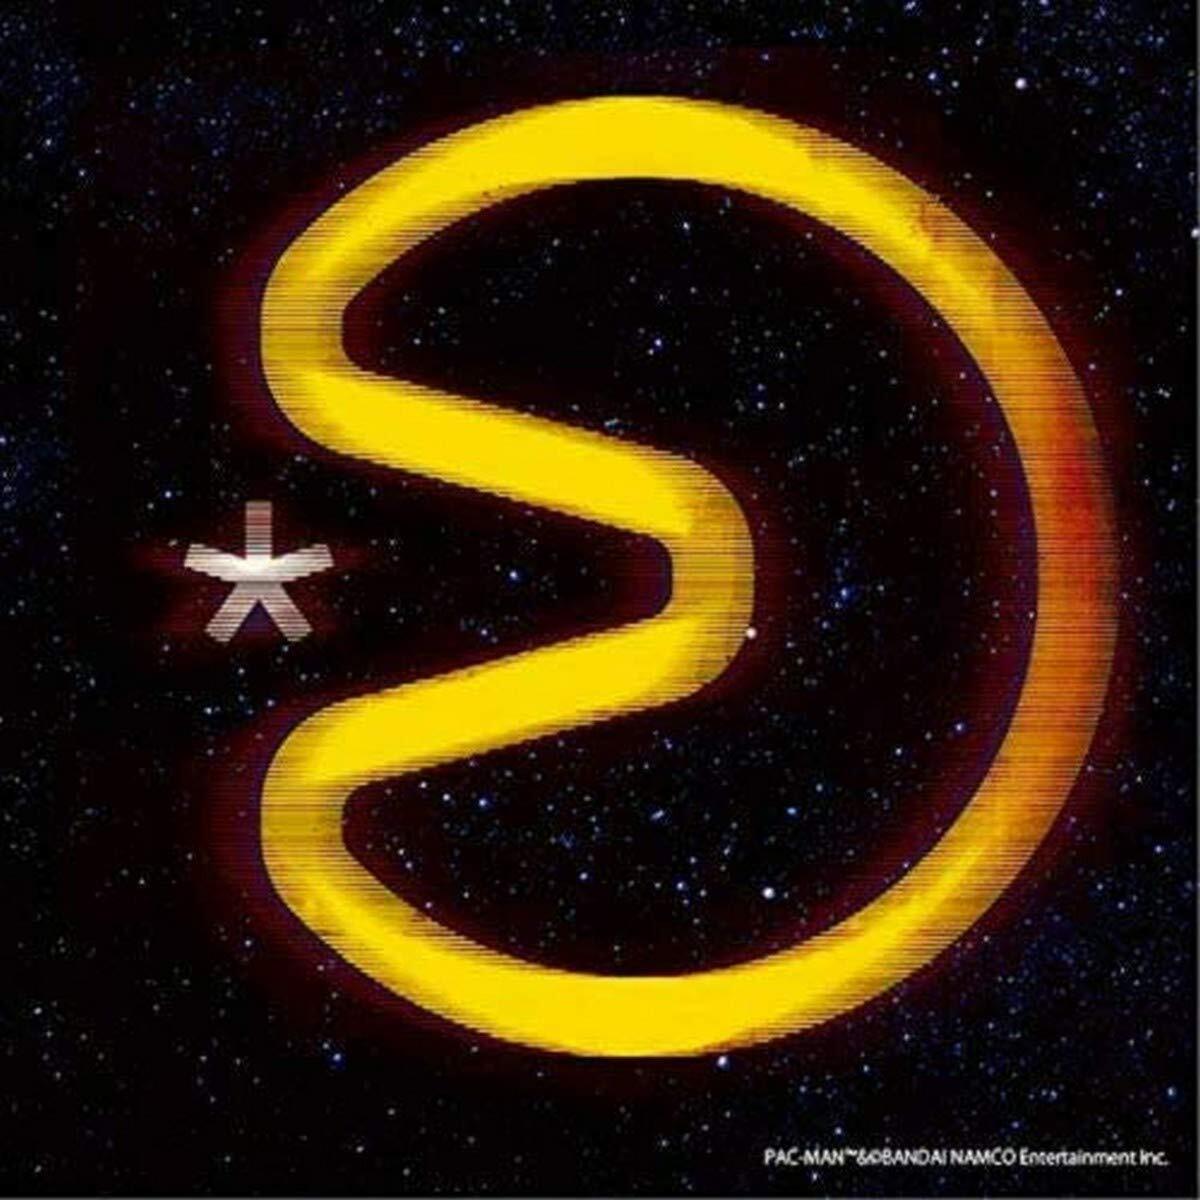 Pac-Man Join The Pac - Pac-man 40th Anniversary Album (CD)